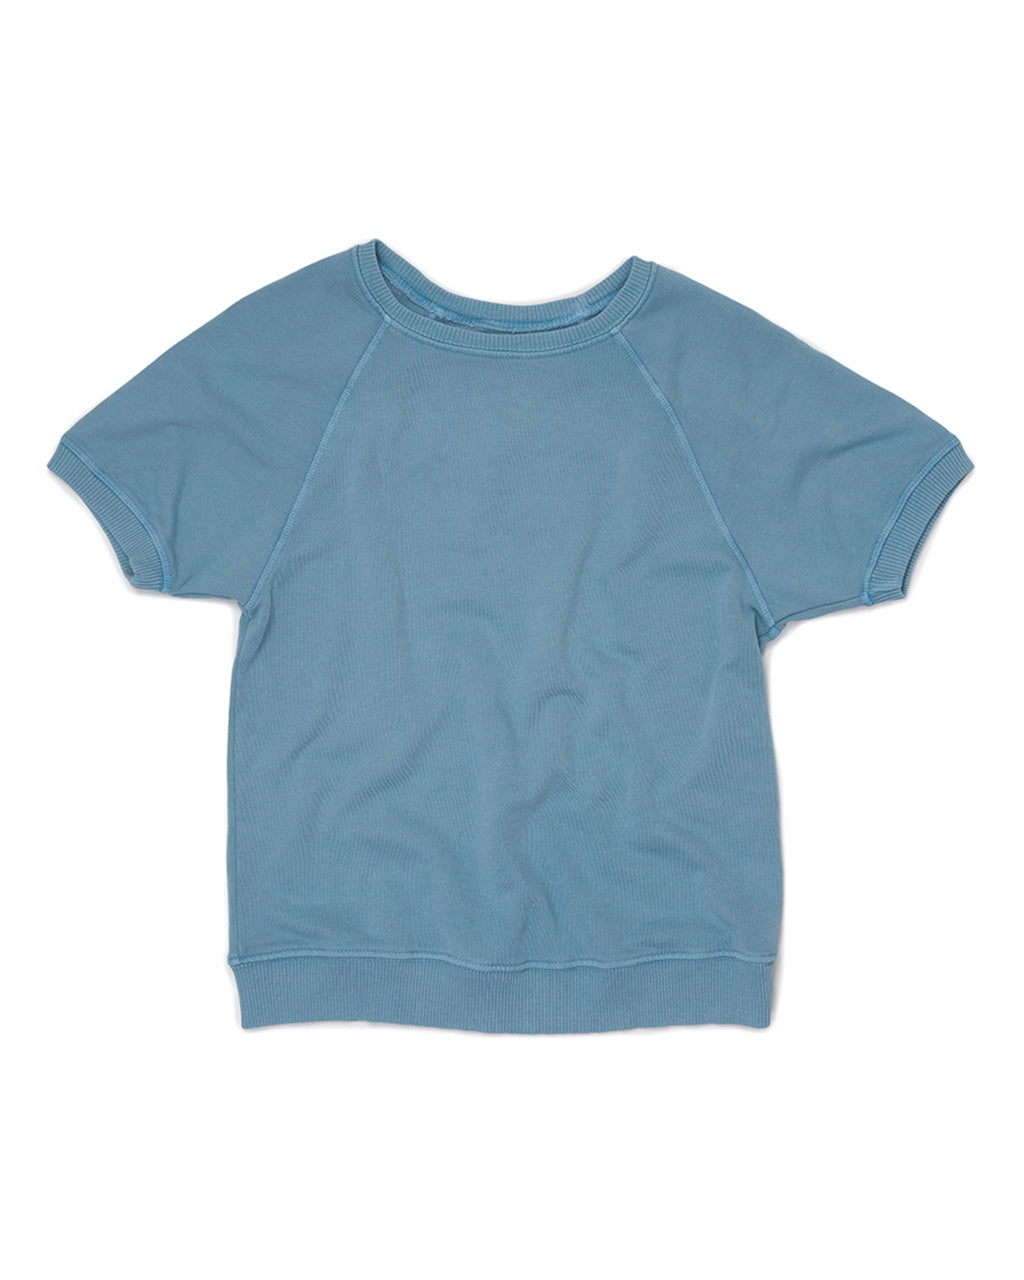 short sleeve sweatshirt - chambray by ban.do - t-shirt - ban.do